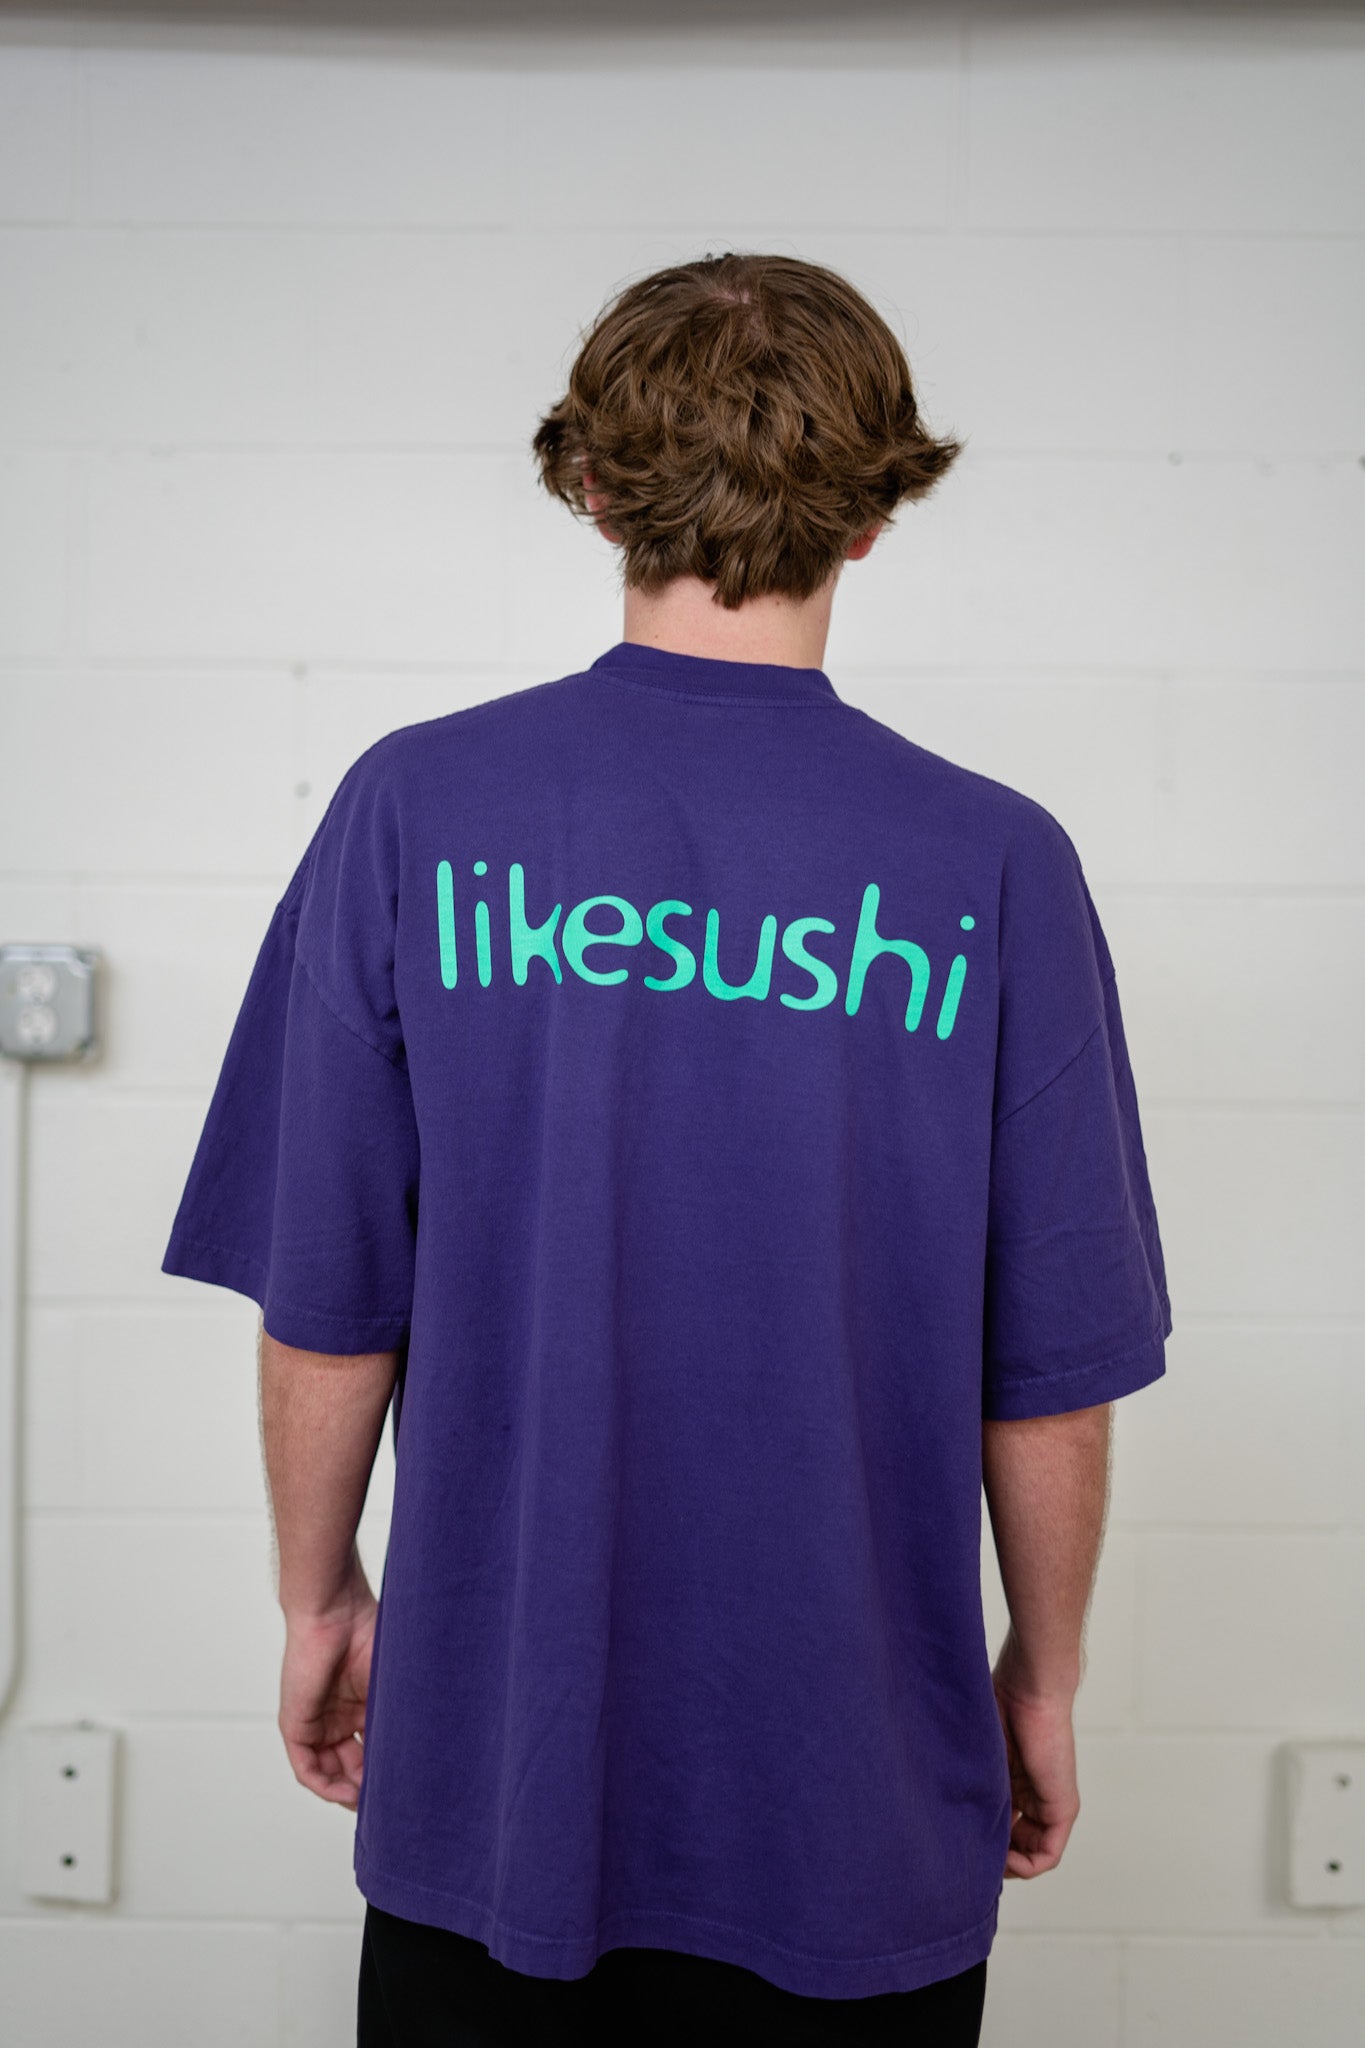 Oh You Got Jokes T-Shirt (Purple) - likesushi